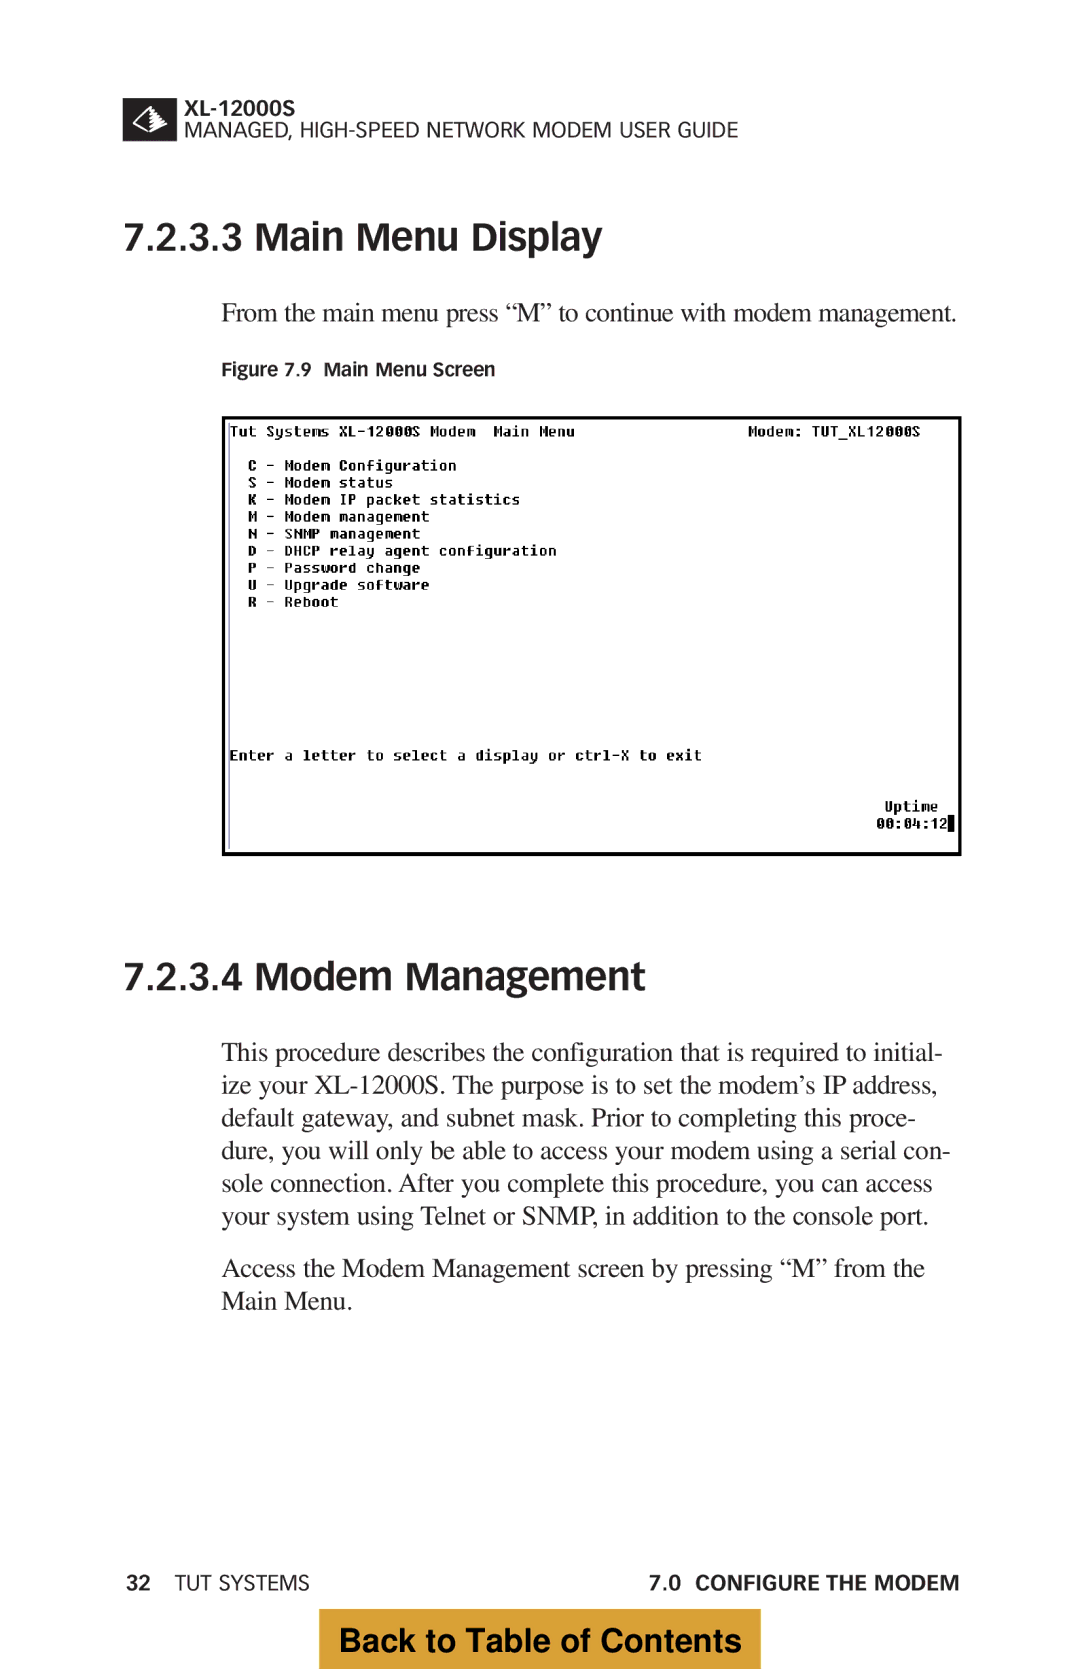 Tut Systems XL-12000S manual Main Menu Display, Modem Management 